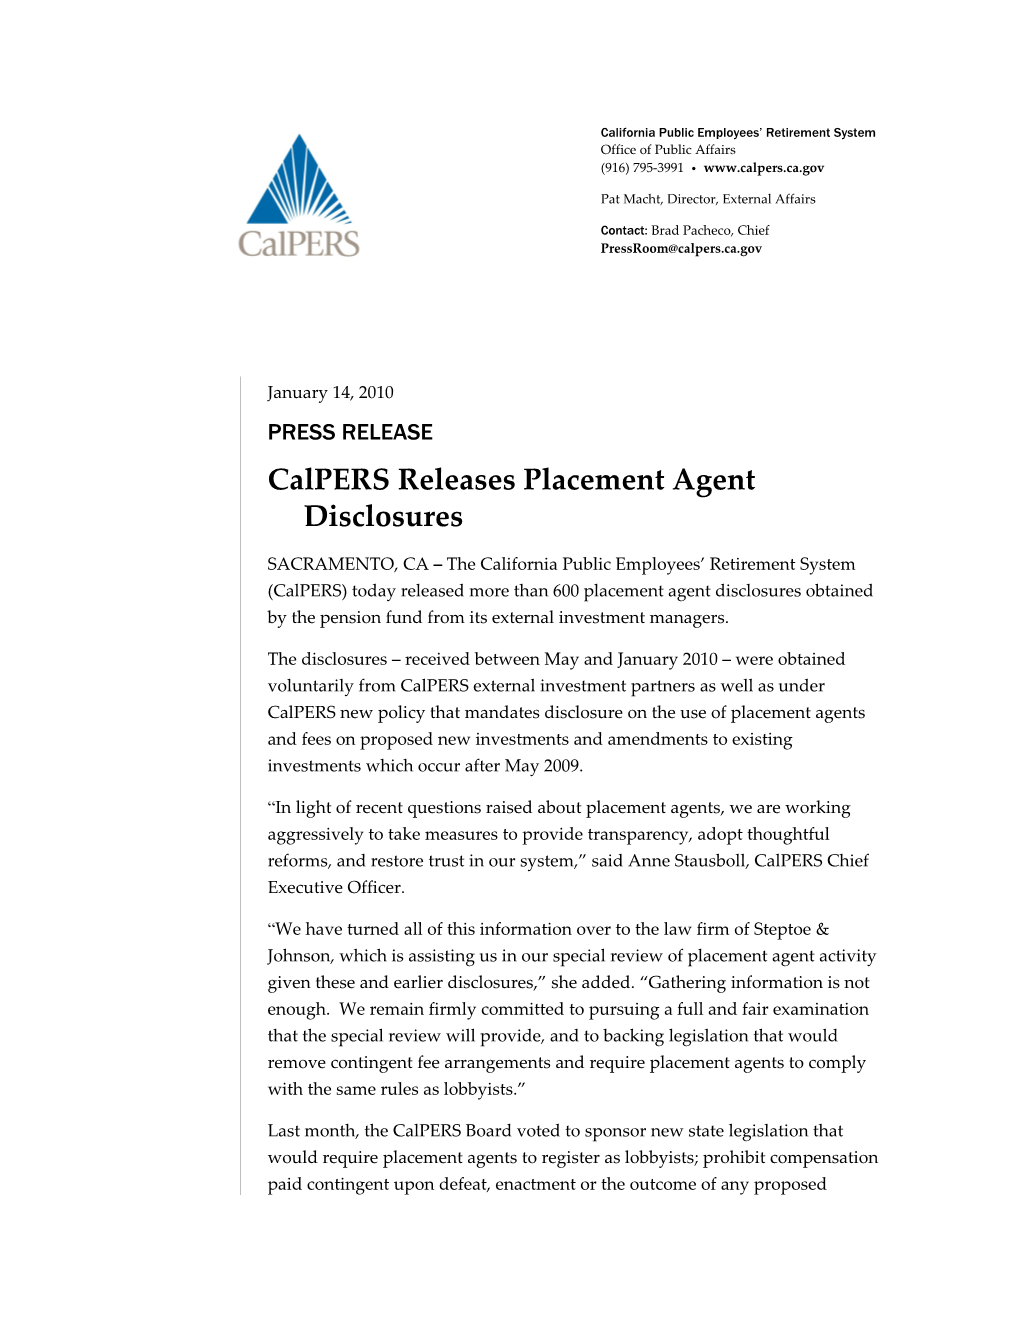 Calpers Press Release